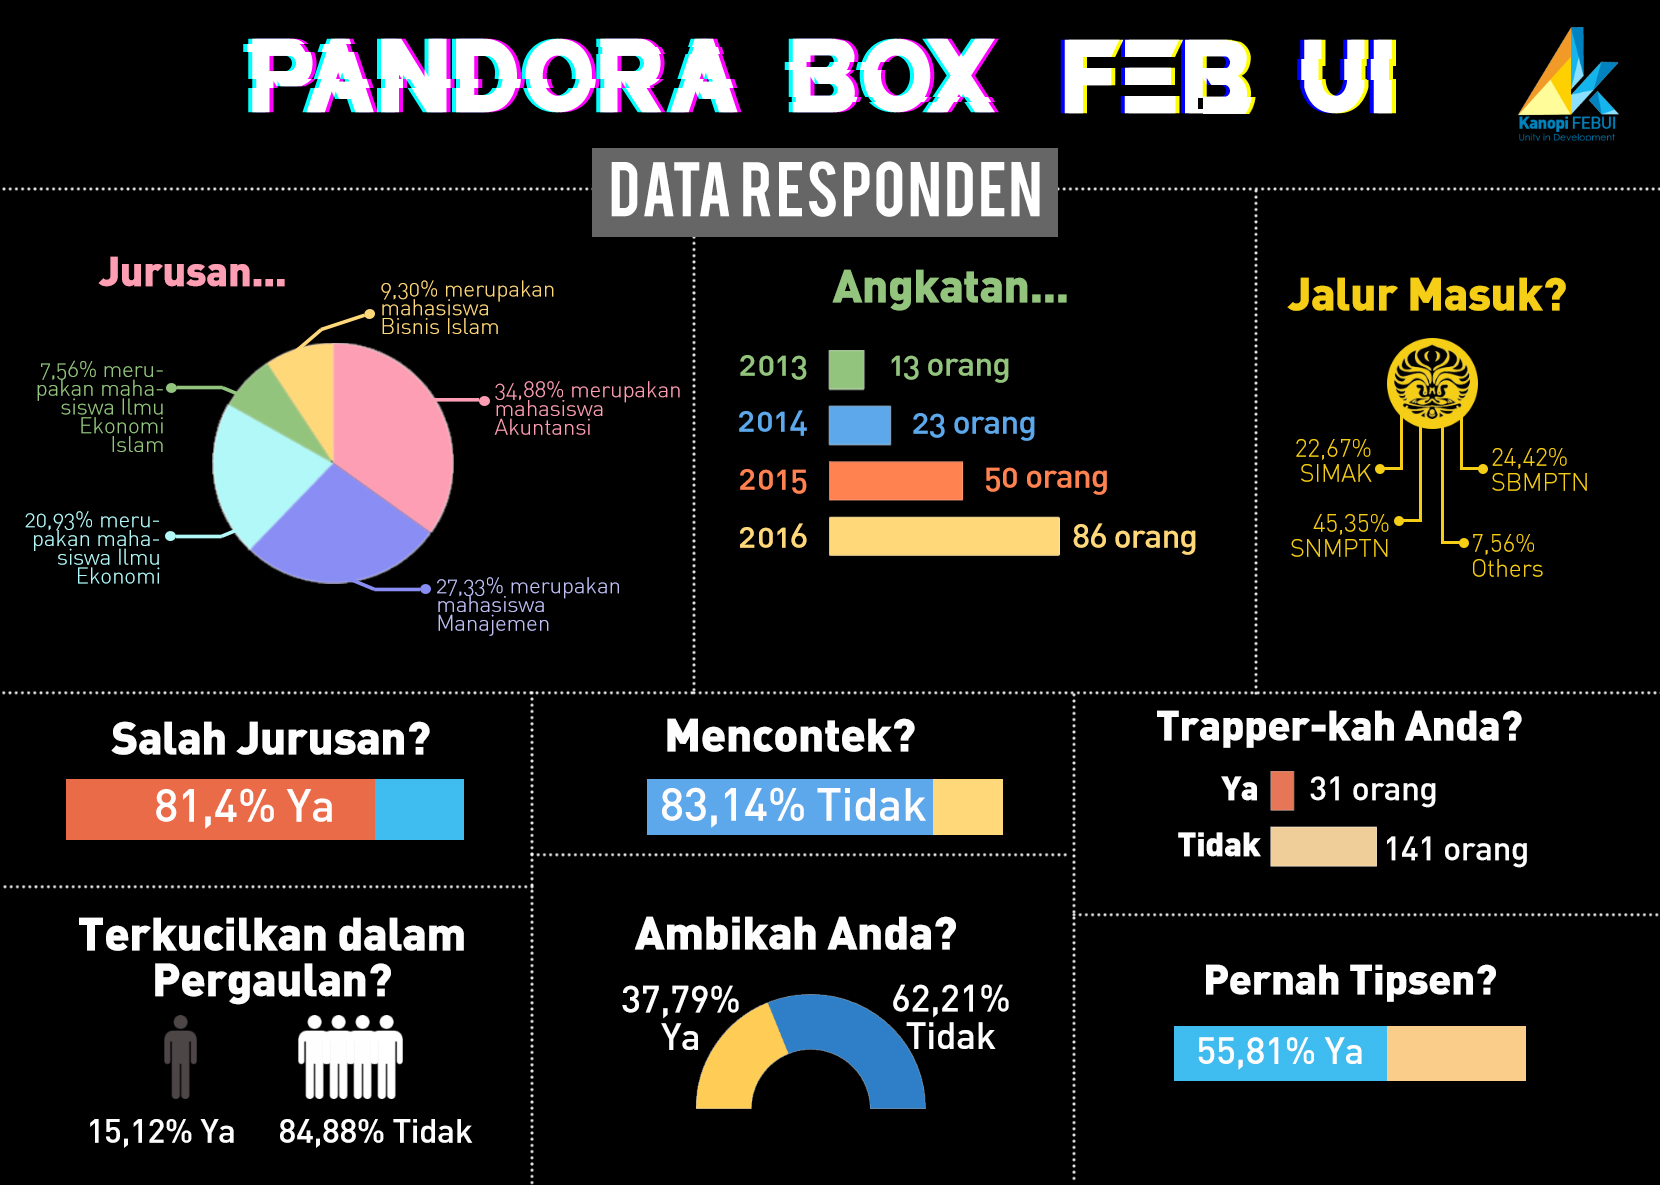 Primera: Pandora Box FEB UI